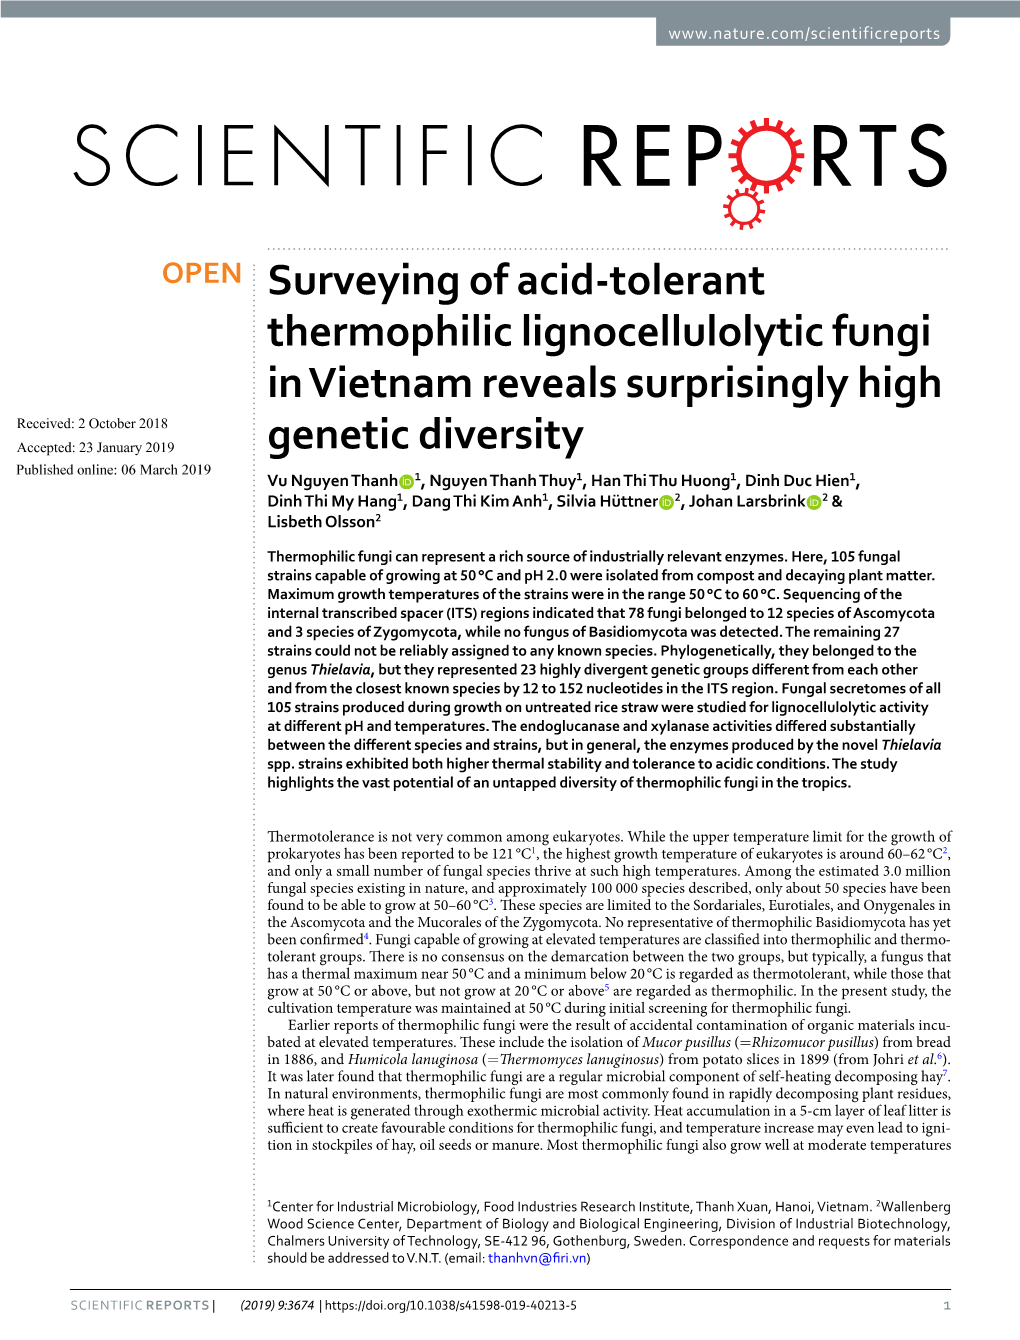 Surveying of Acid-Tolerant Thermophilic Lignocellulolytic Fungi in Vietnam